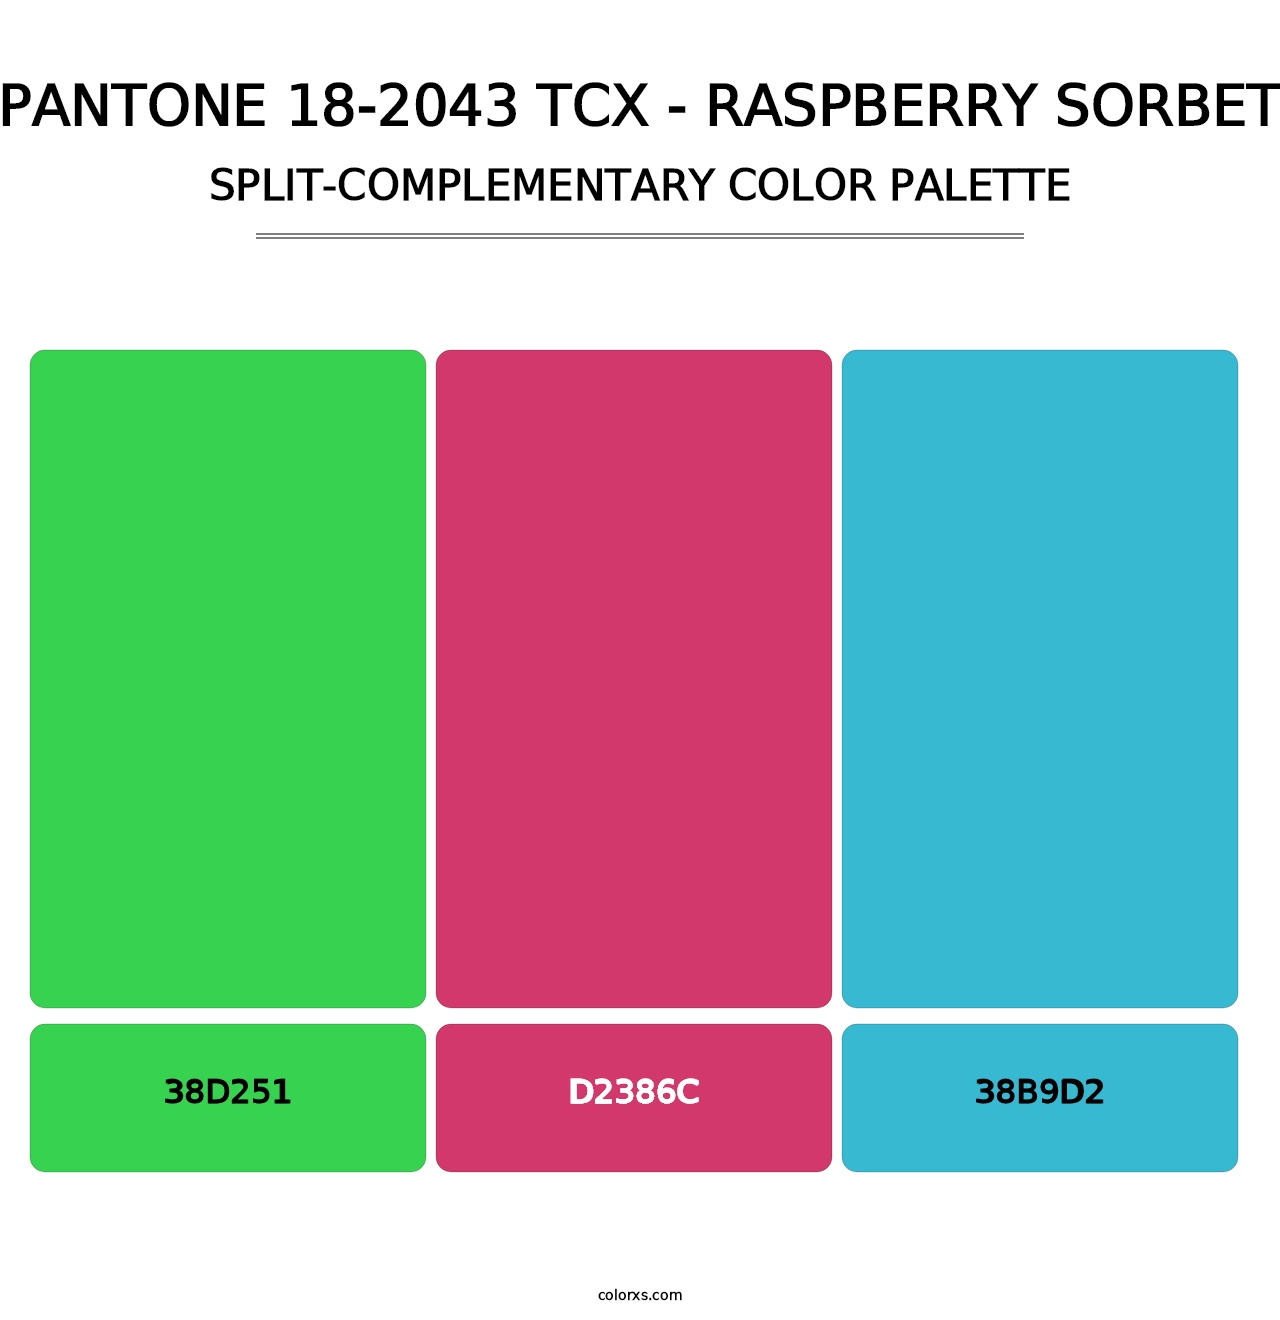 PANTONE 18-2043 TCX - Raspberry Sorbet - Split-Complementary Color Palette